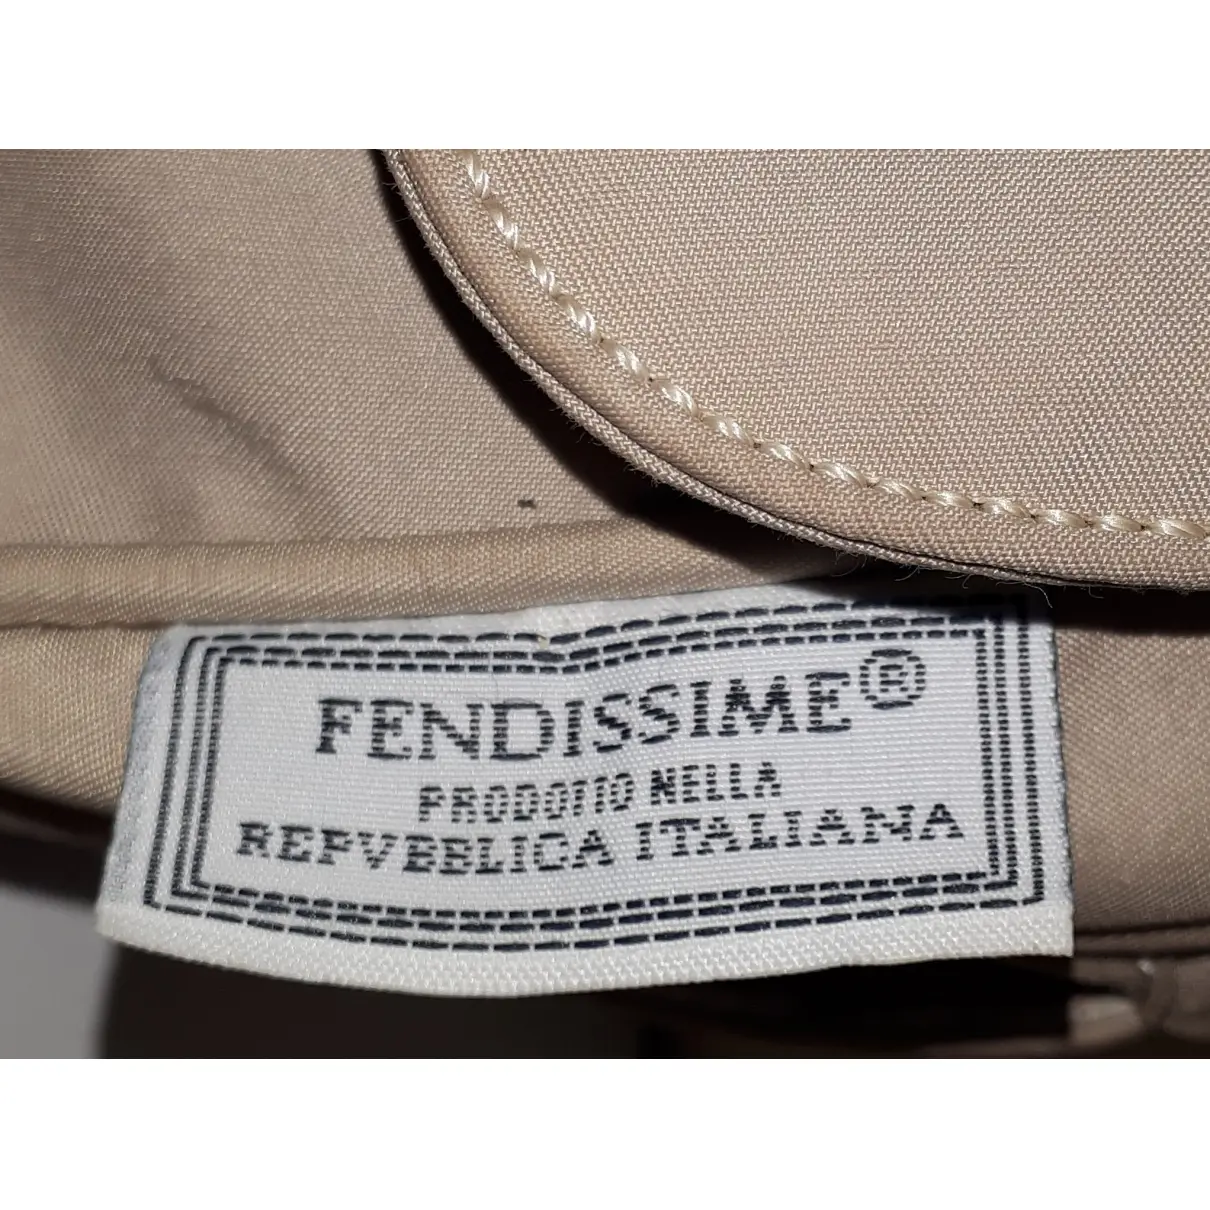 Crossbody bag Fendissime - Vintage